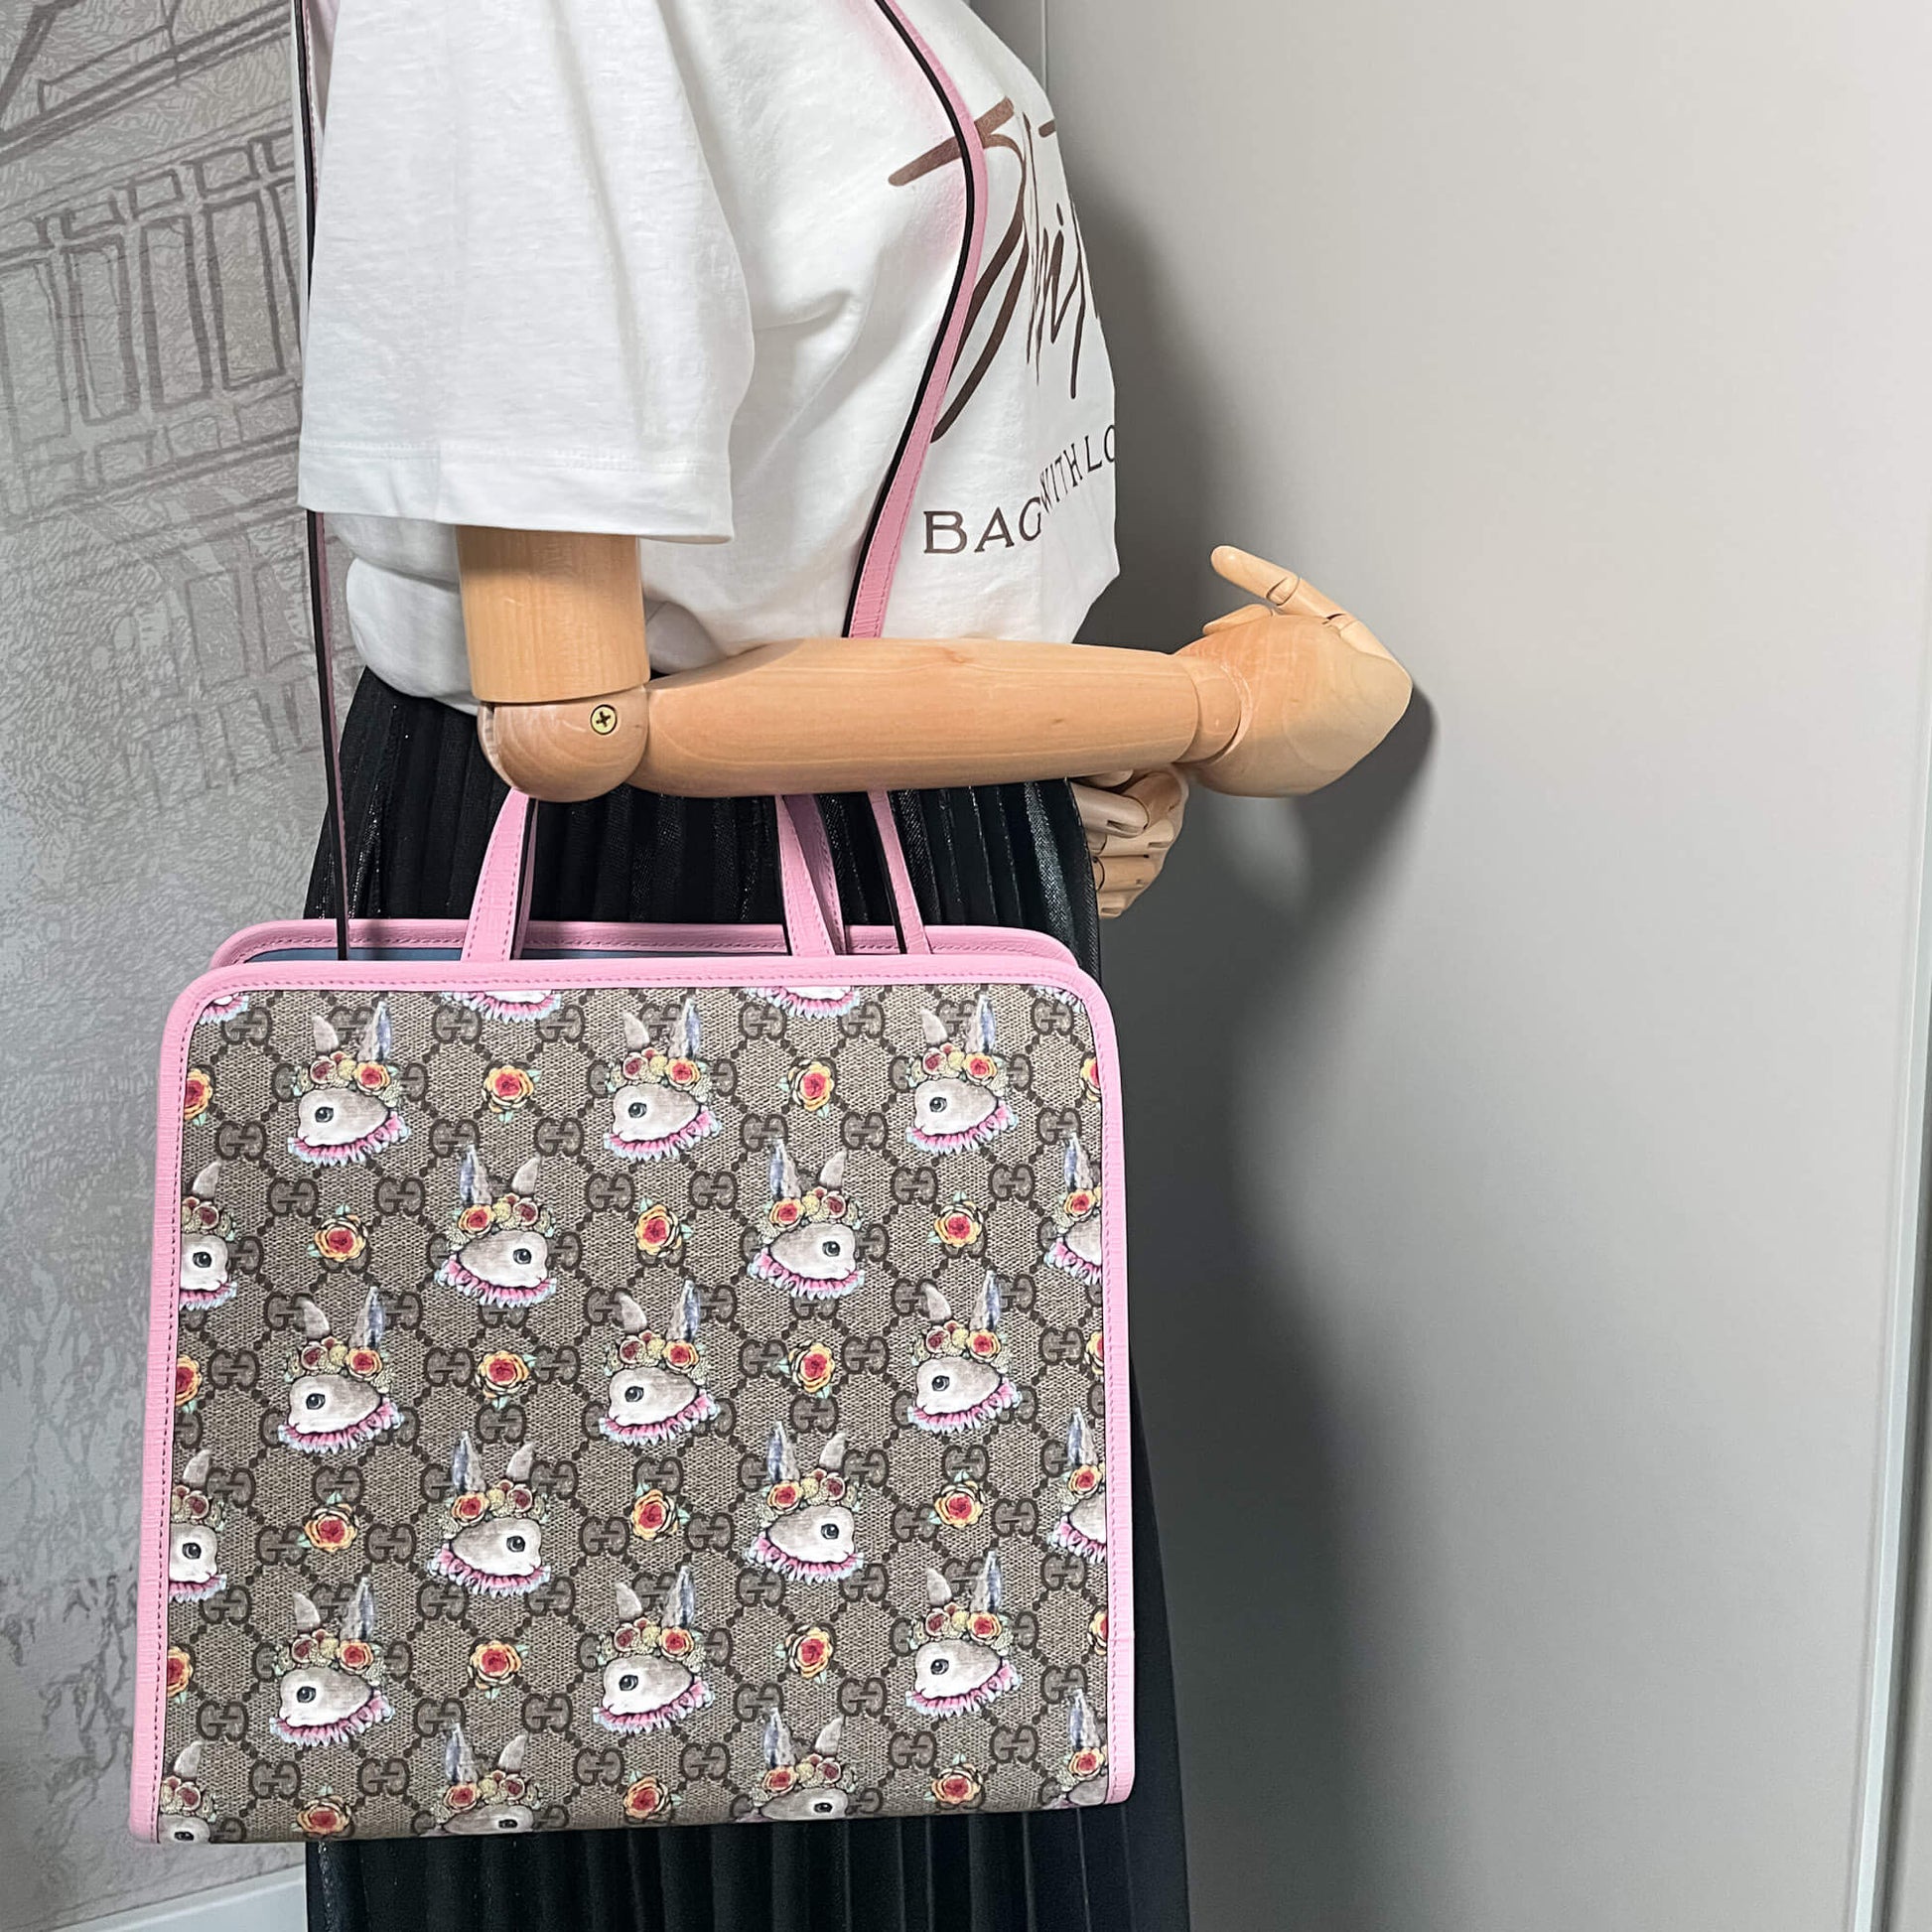 Gucci Children's Yuko Higuchi GG Supreme Tote Bag Pink 630542